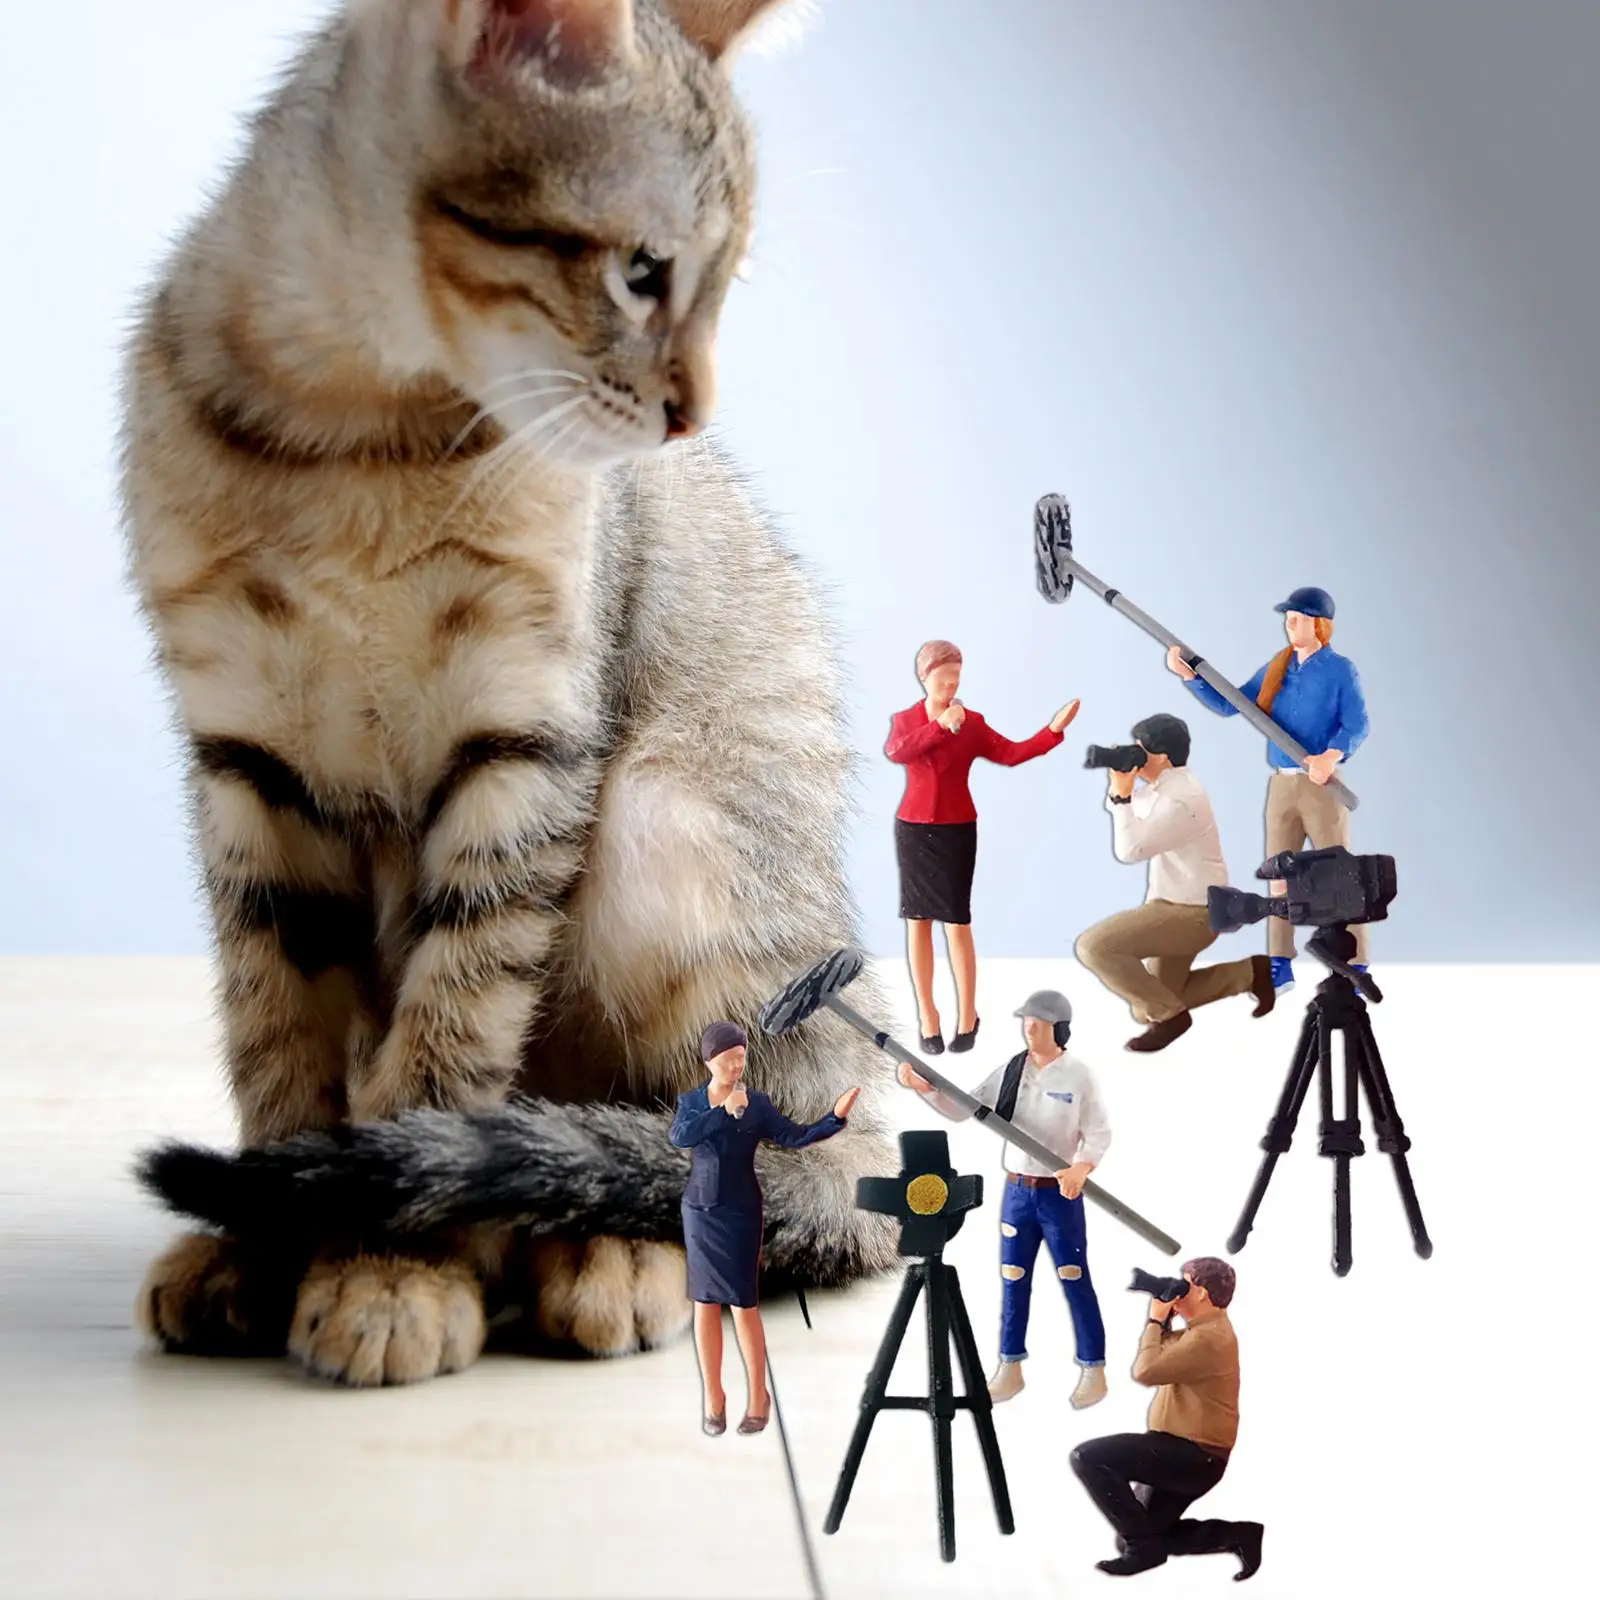 1/64 Broadcast Figure, People Model Resin Mini Figure Live Streaming Scene for Desktop Ornament Layout Micro Landscape Dioramas